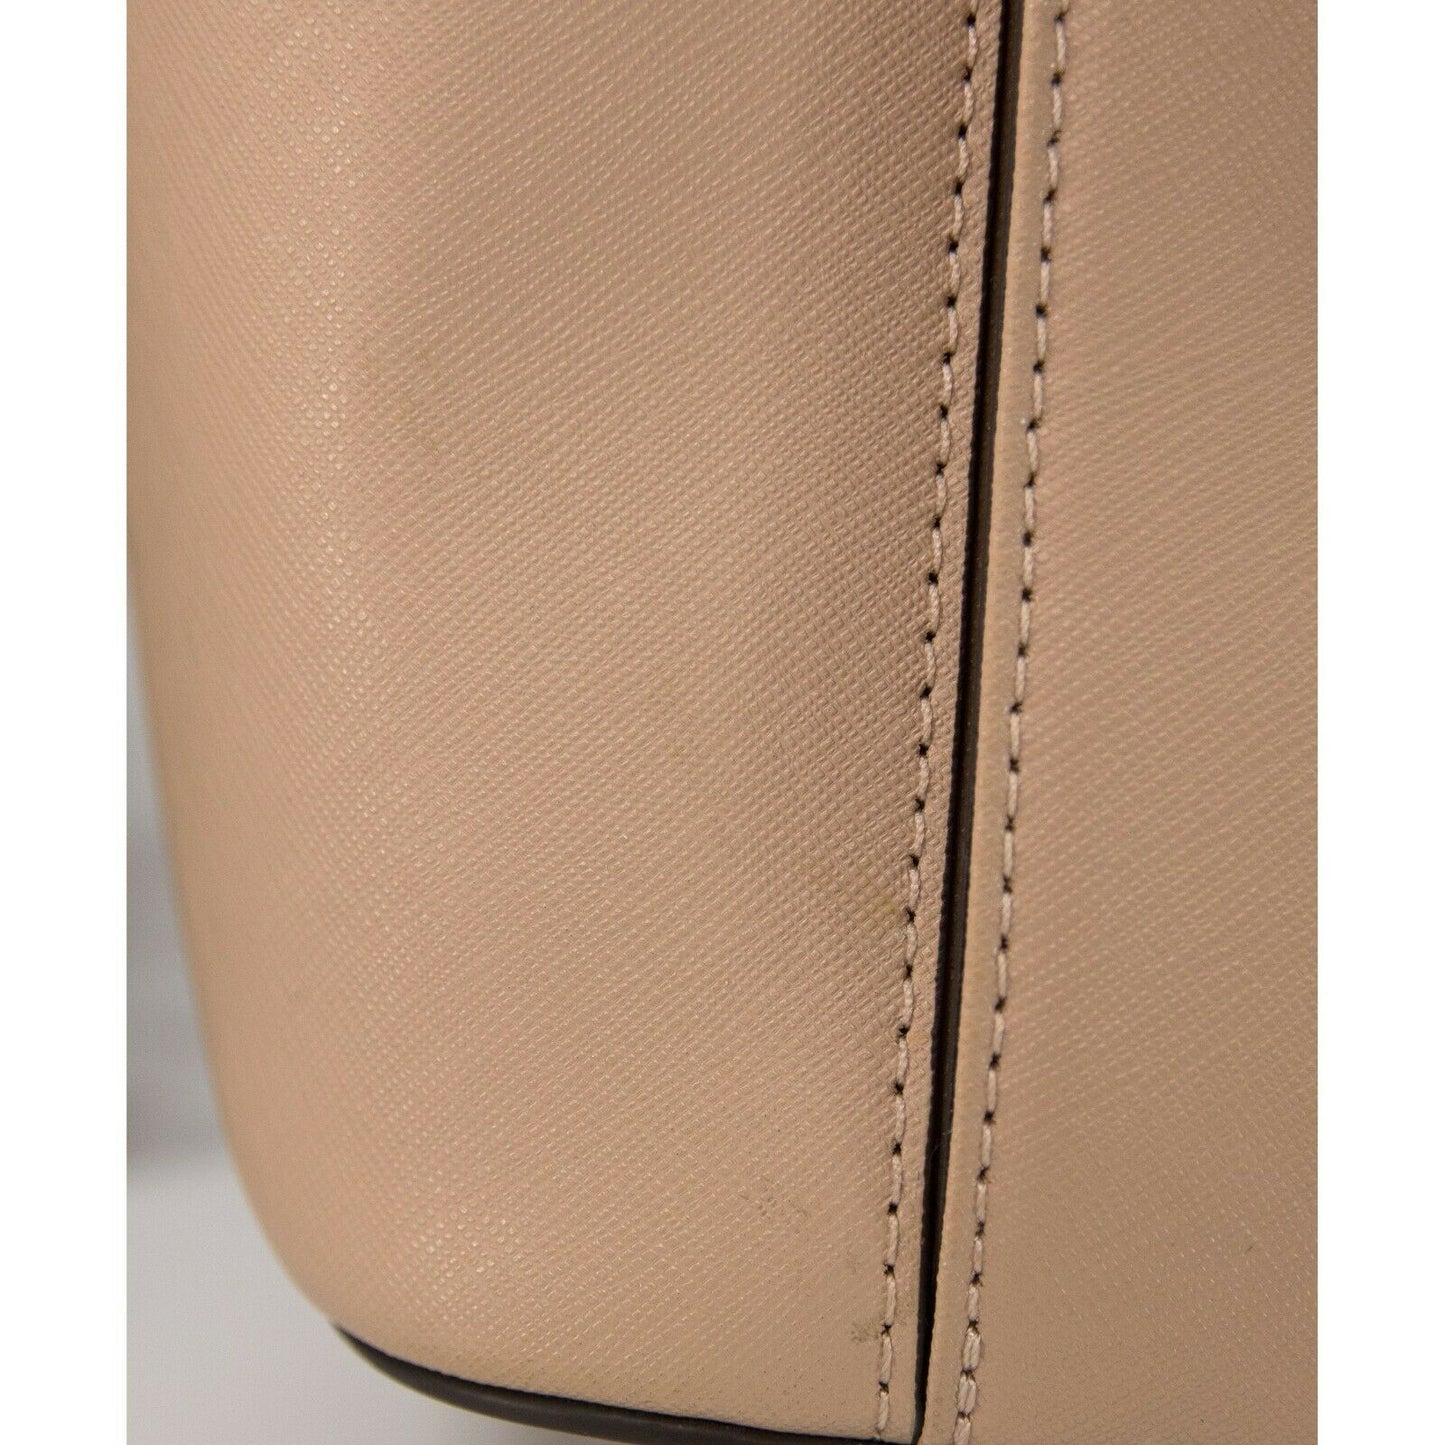 Michael Kors Blush Saffiano Leather Large Pocket Tote Bag EUC